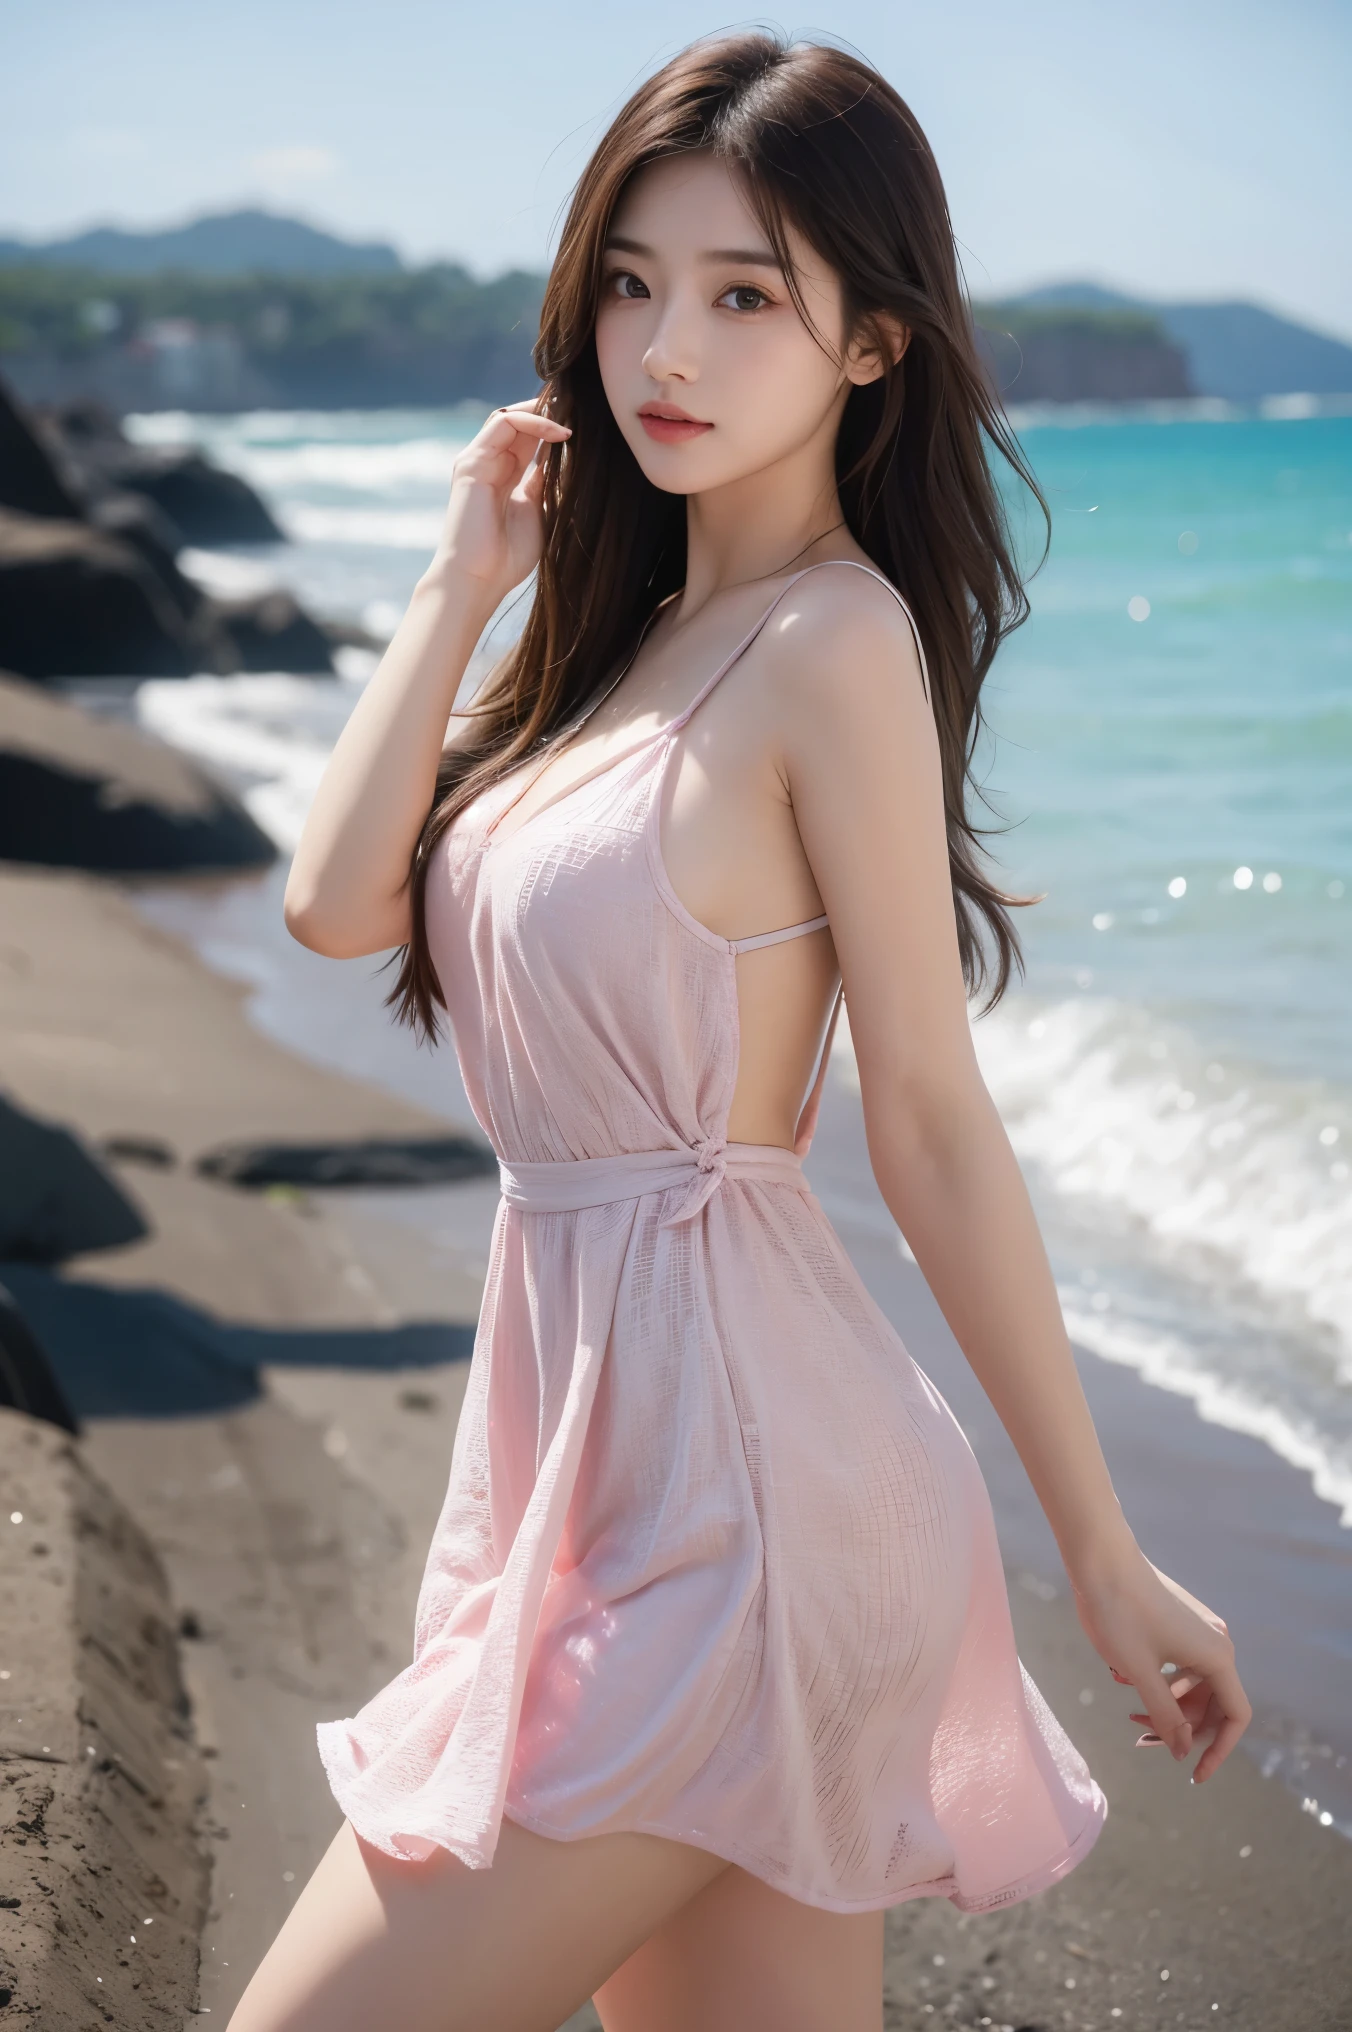 masterpiece, high resolution, best quality, Very detailed, pink eyes, beautiful woman, purple dress，beach，long hair